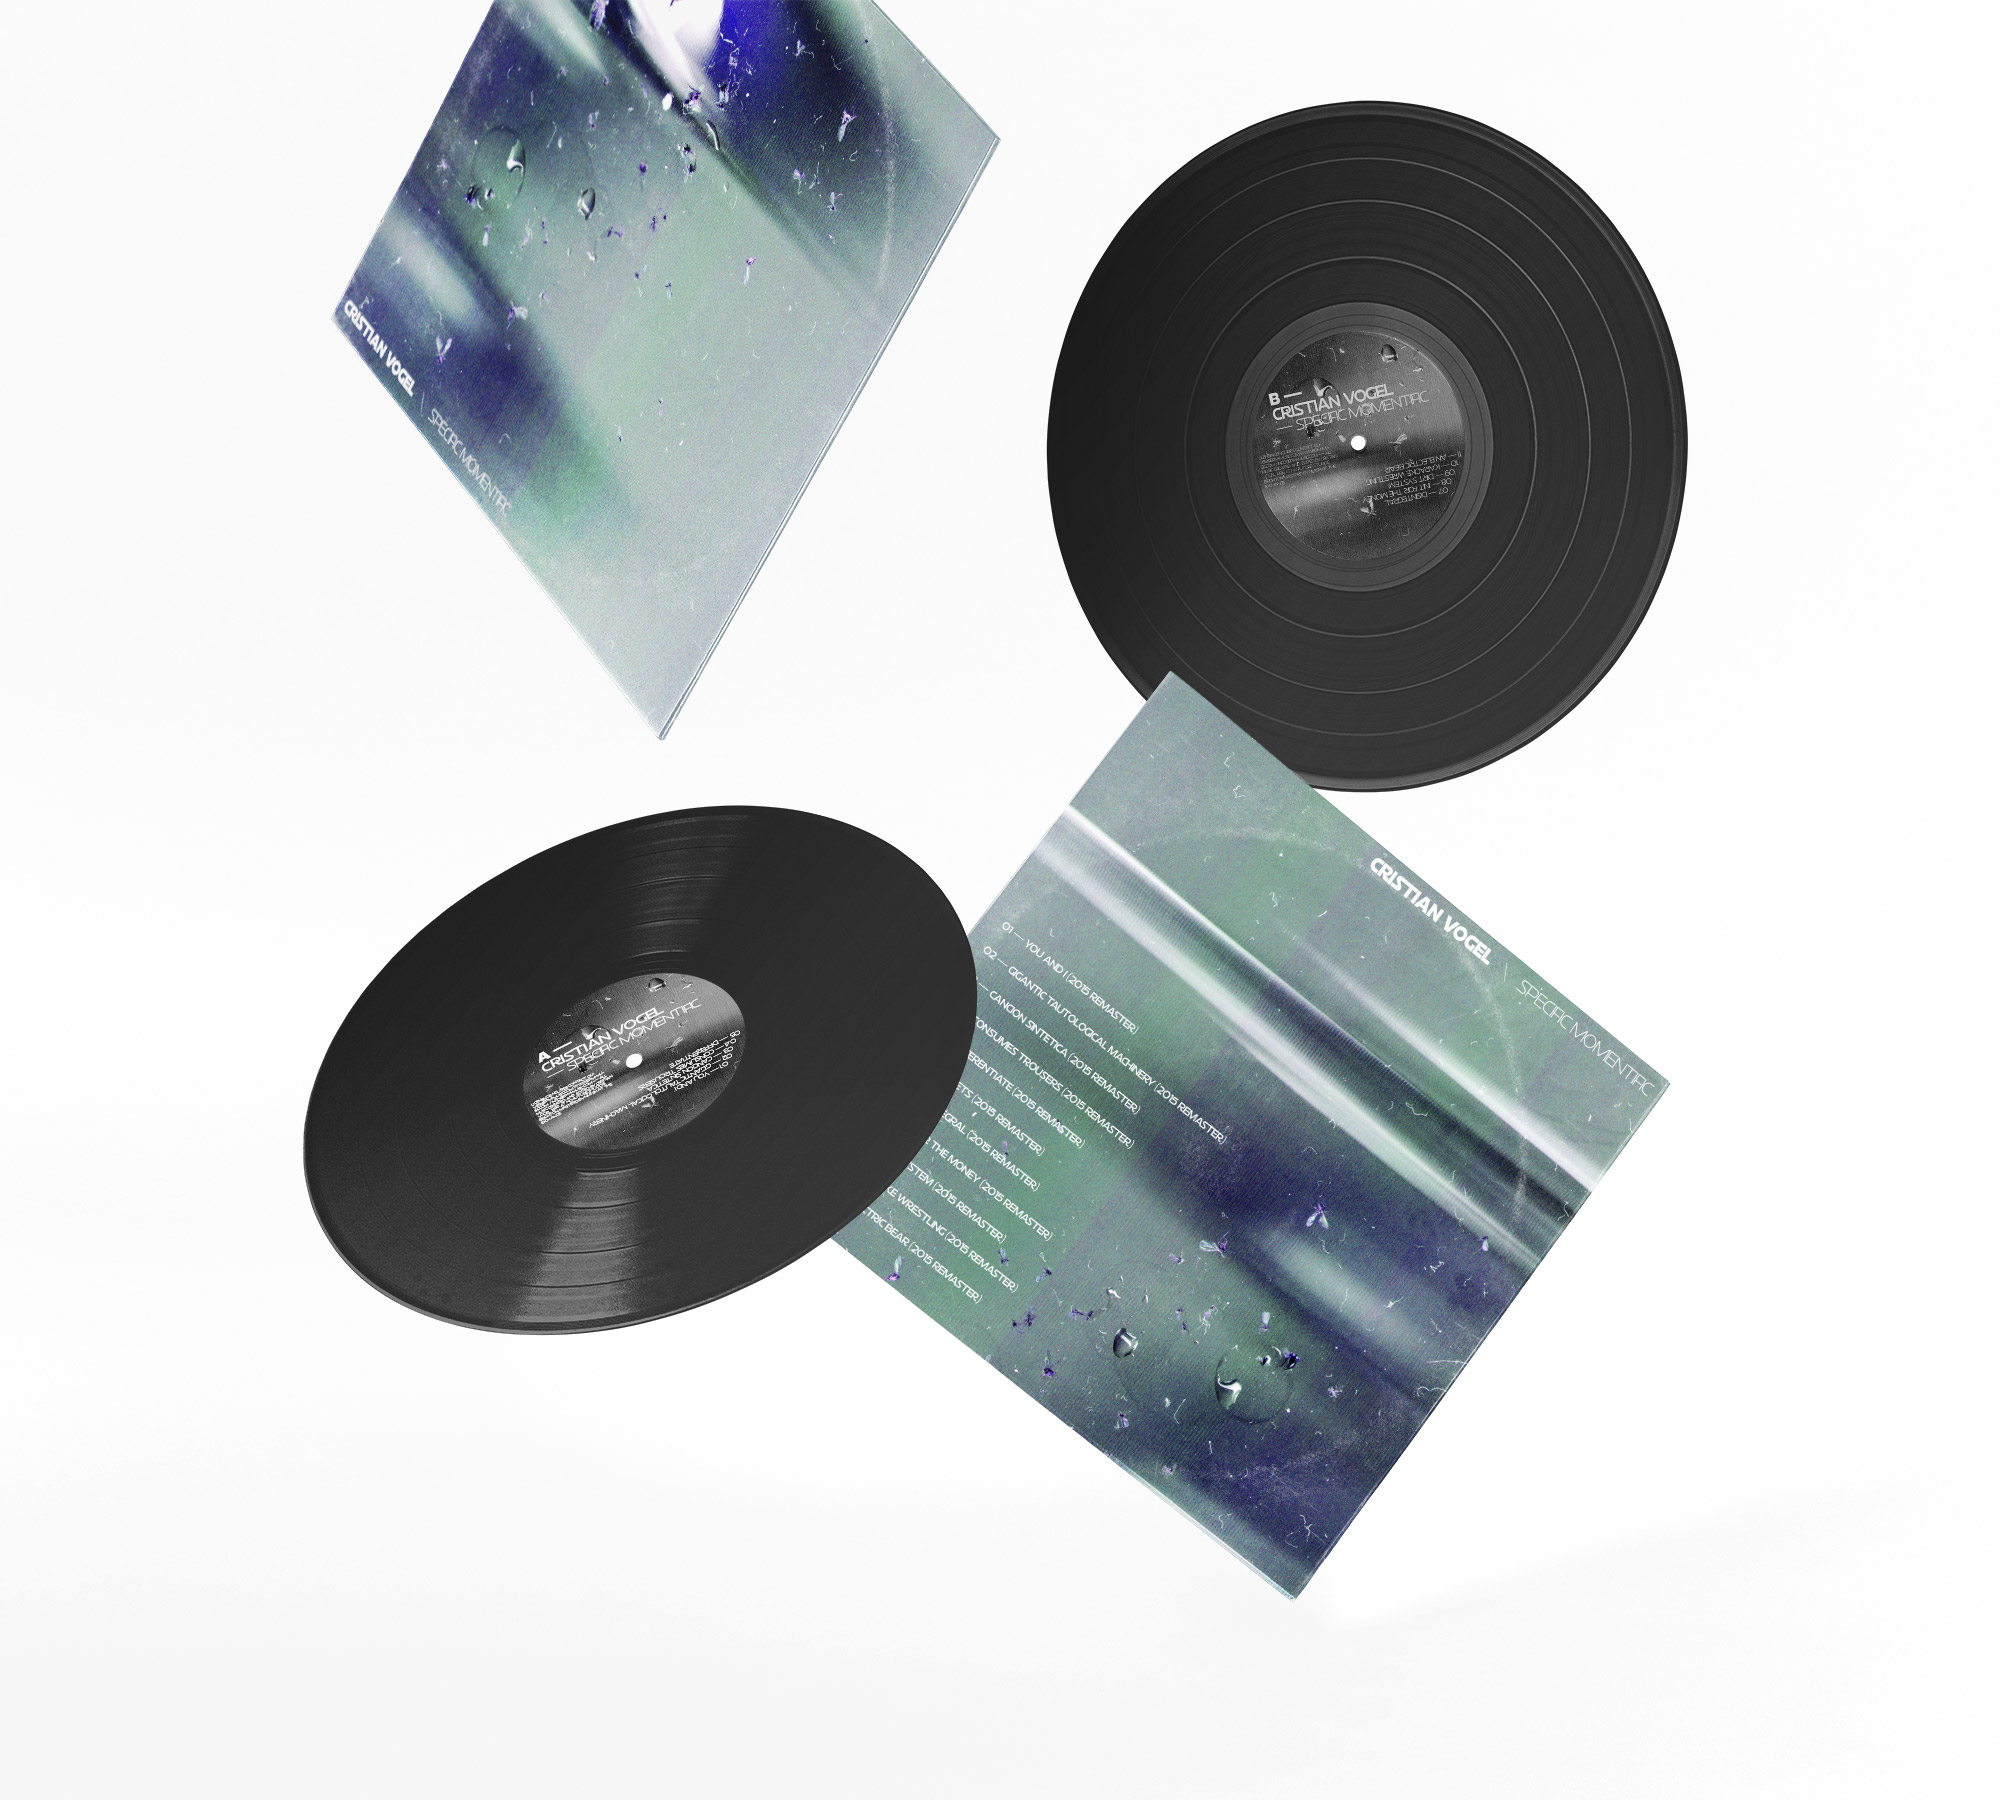 alternative vinyl record cover design for Cristian Vogels LP Specific Monumentific by f-land